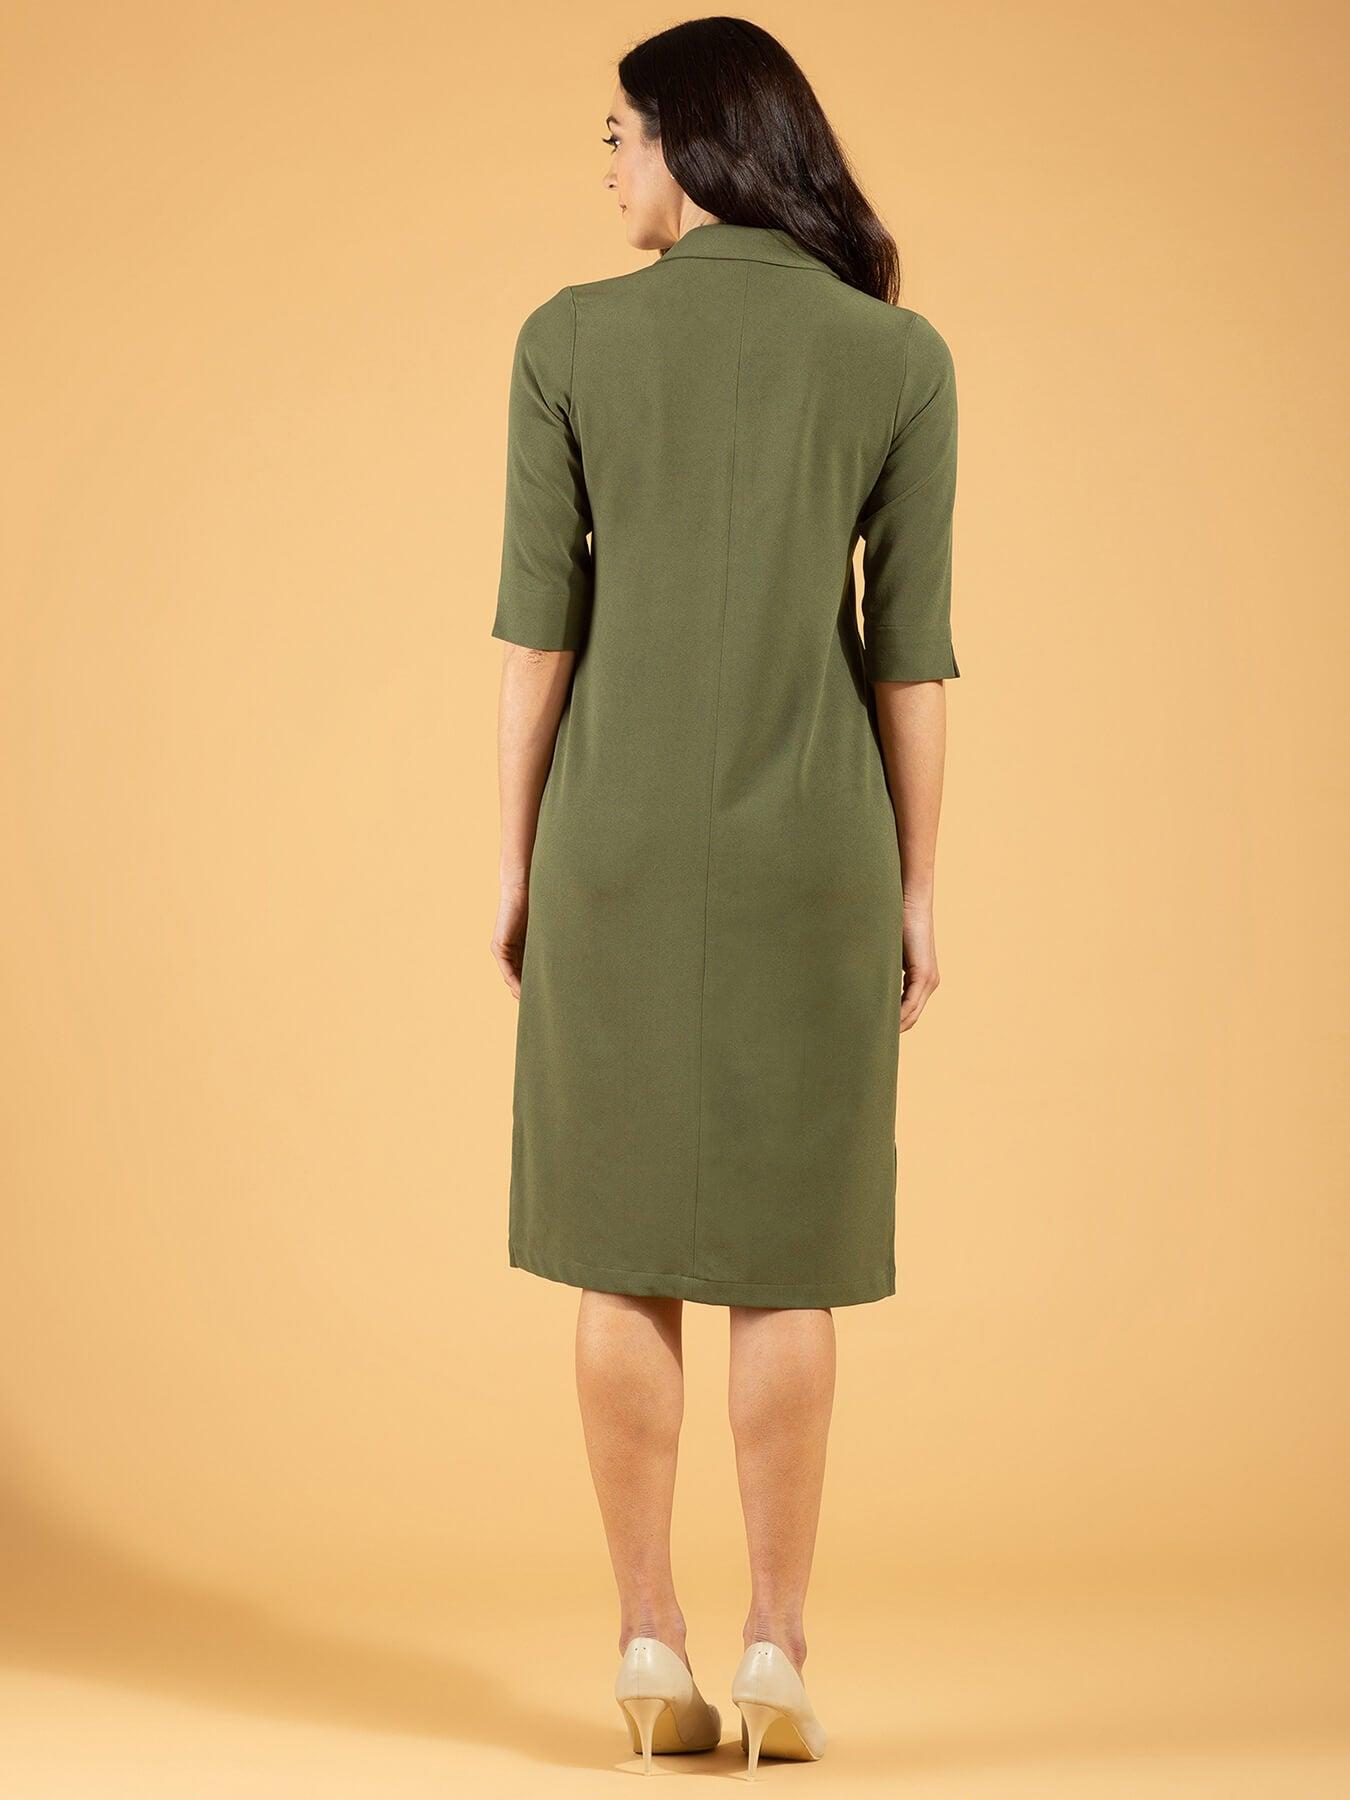 Front Pocket Lapel Dress - Moss Green| Formal Dresses